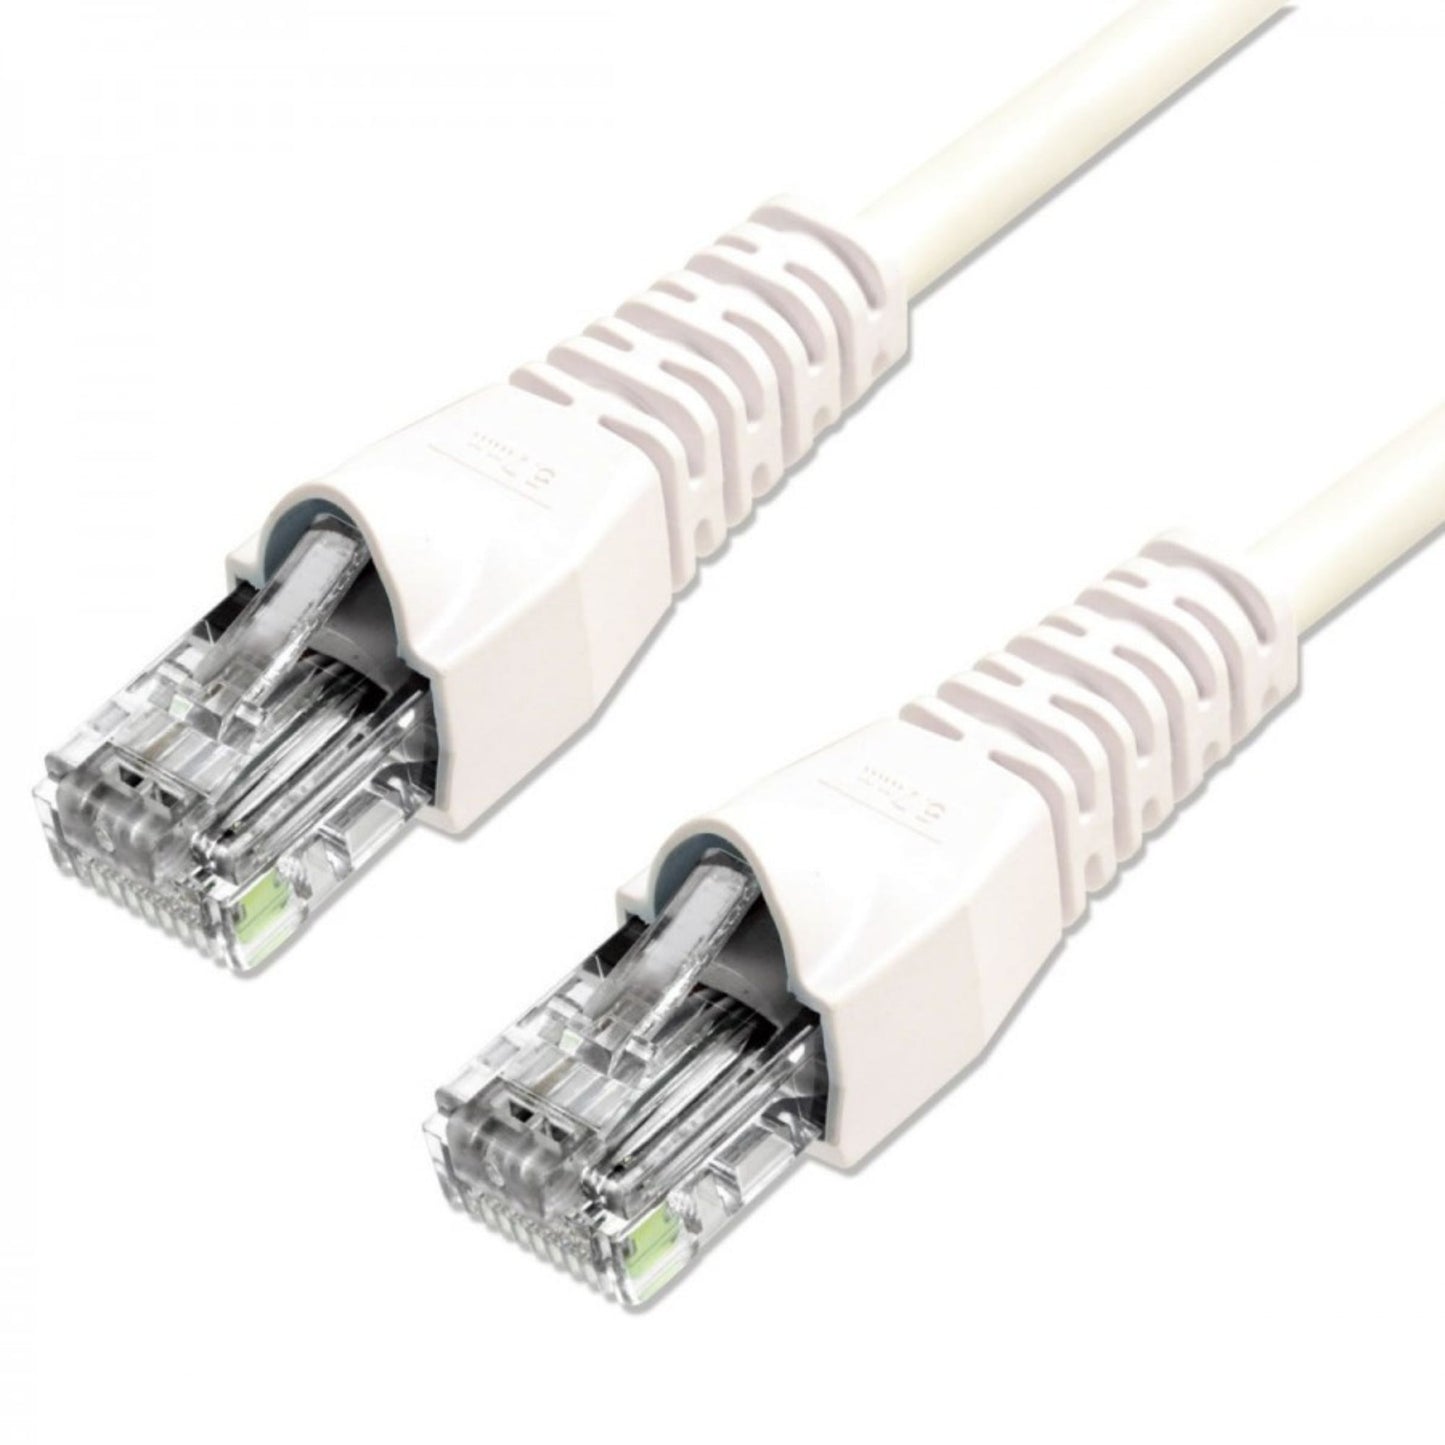 5m White Cat5e RJ45 Network Ethernet LAN UTP Patch Cable - Fast Internet Connection